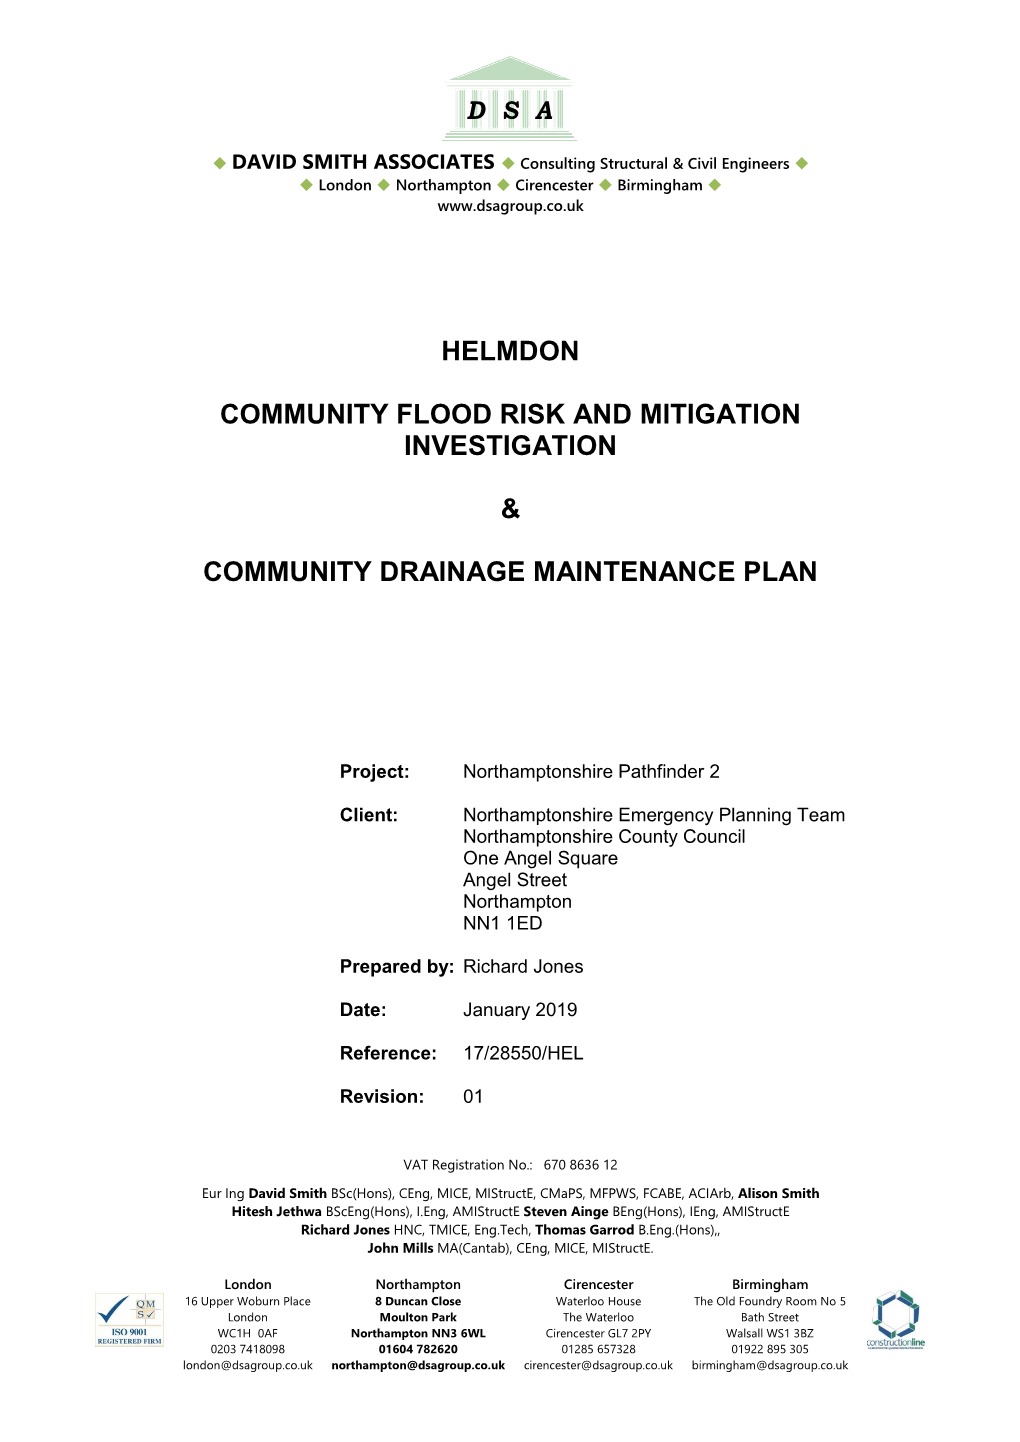 Helmdon Community Flood Risk and Mitigation Investigation Community Drainage Maintenance Plan